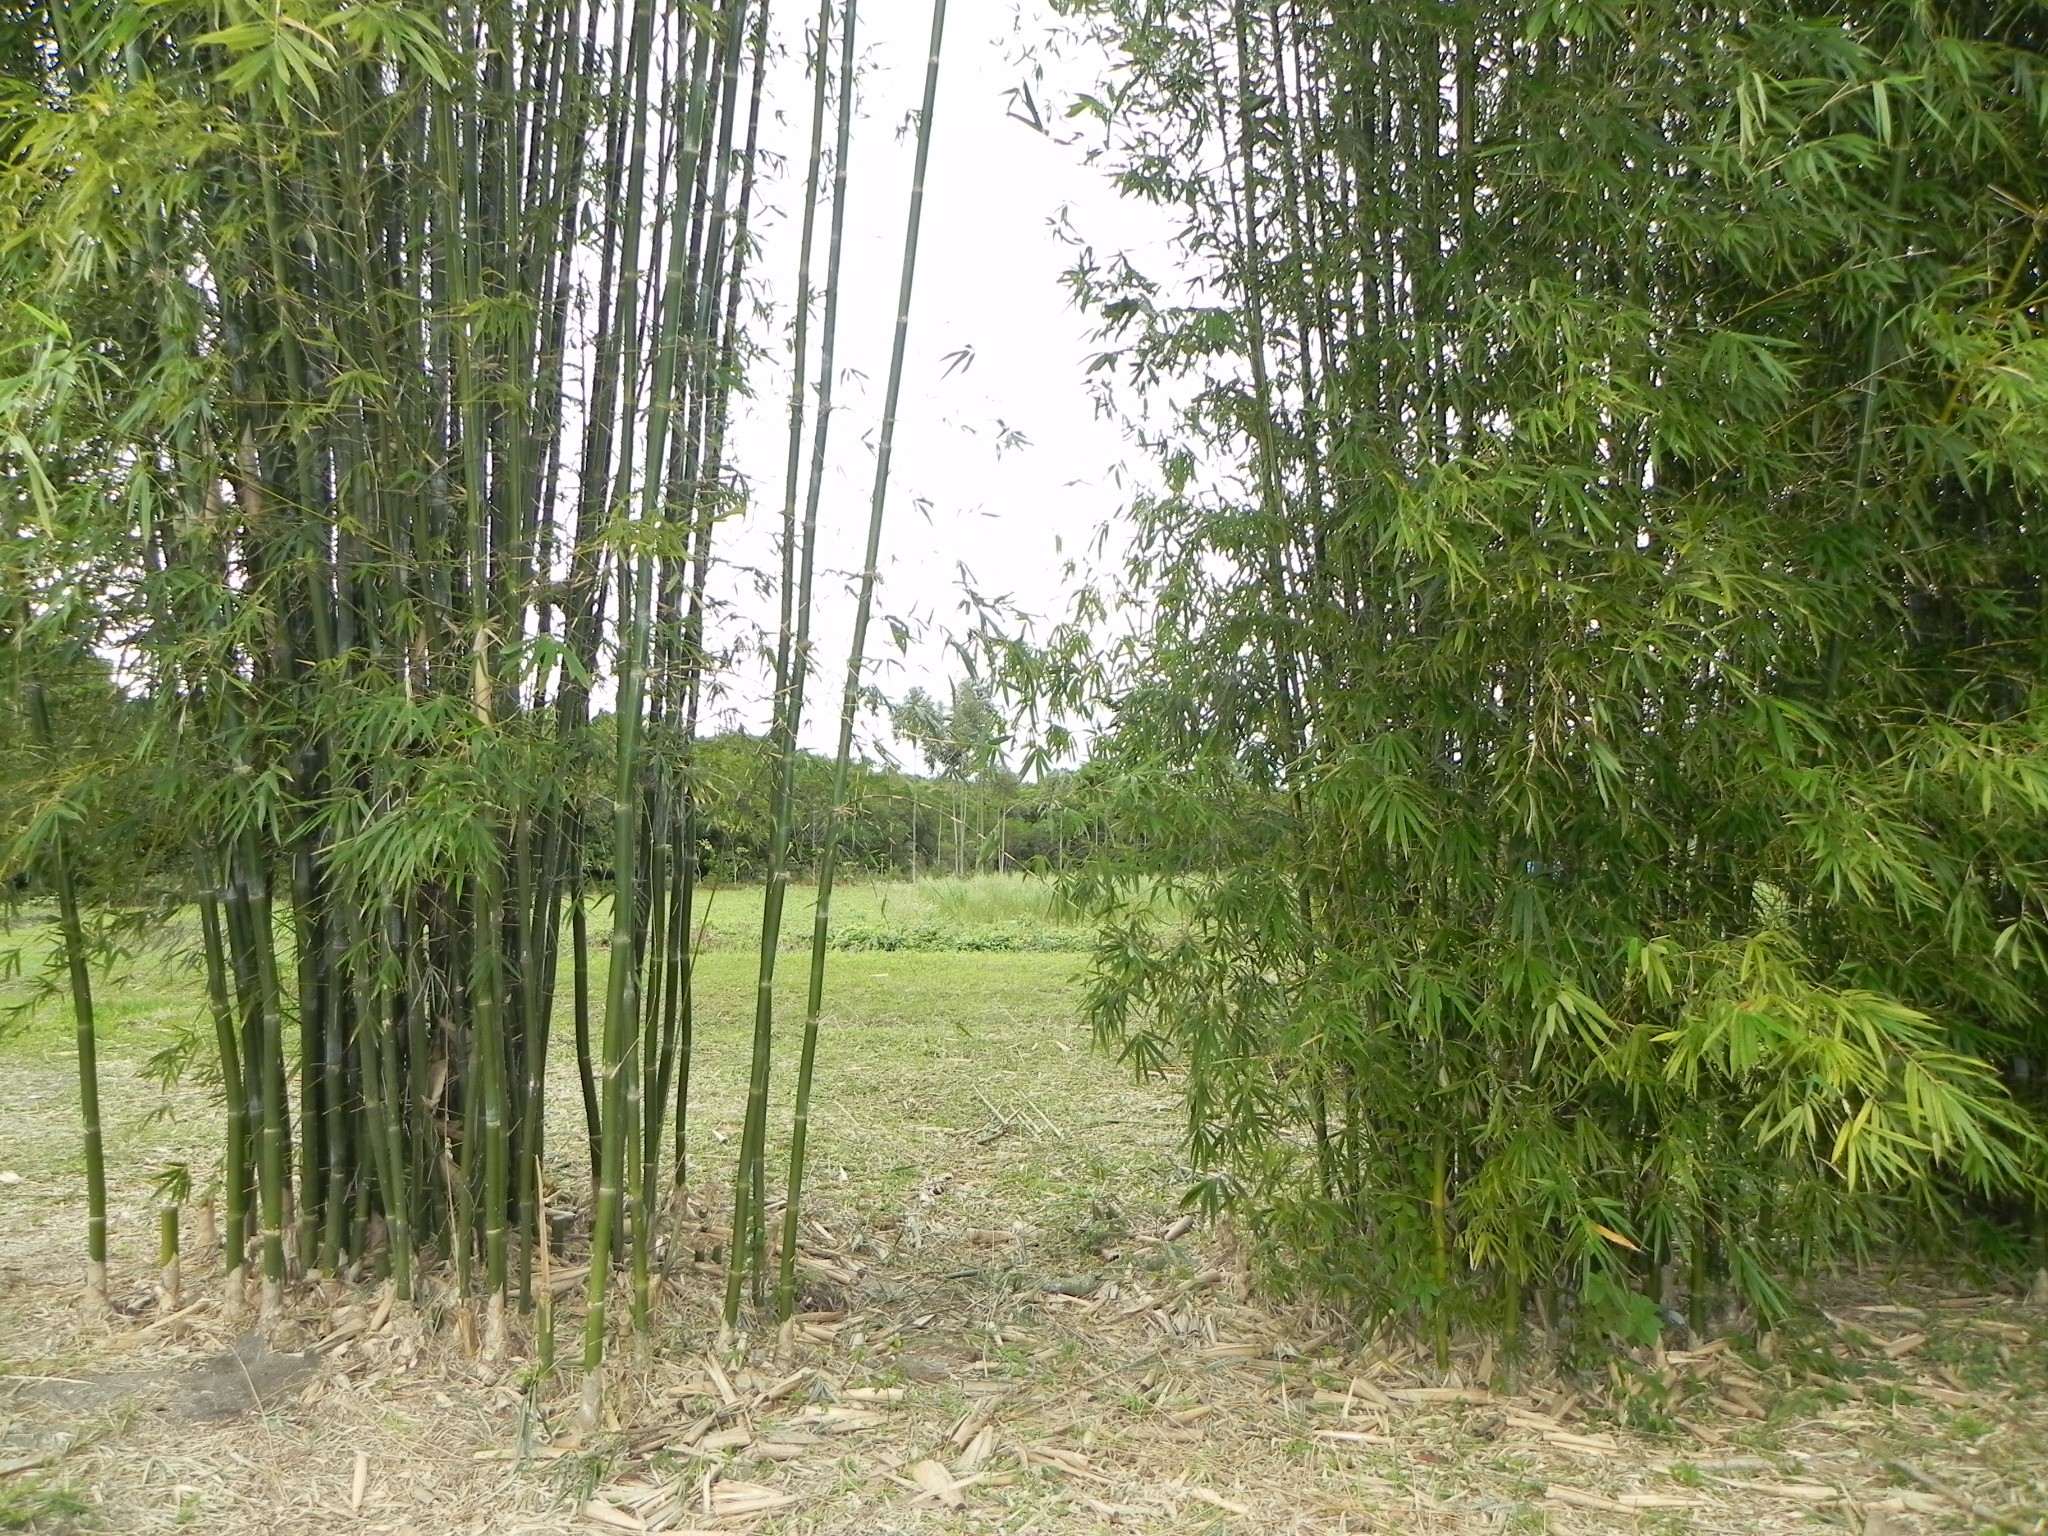 20100723 Fazenda manejo bambusais 001.jpg